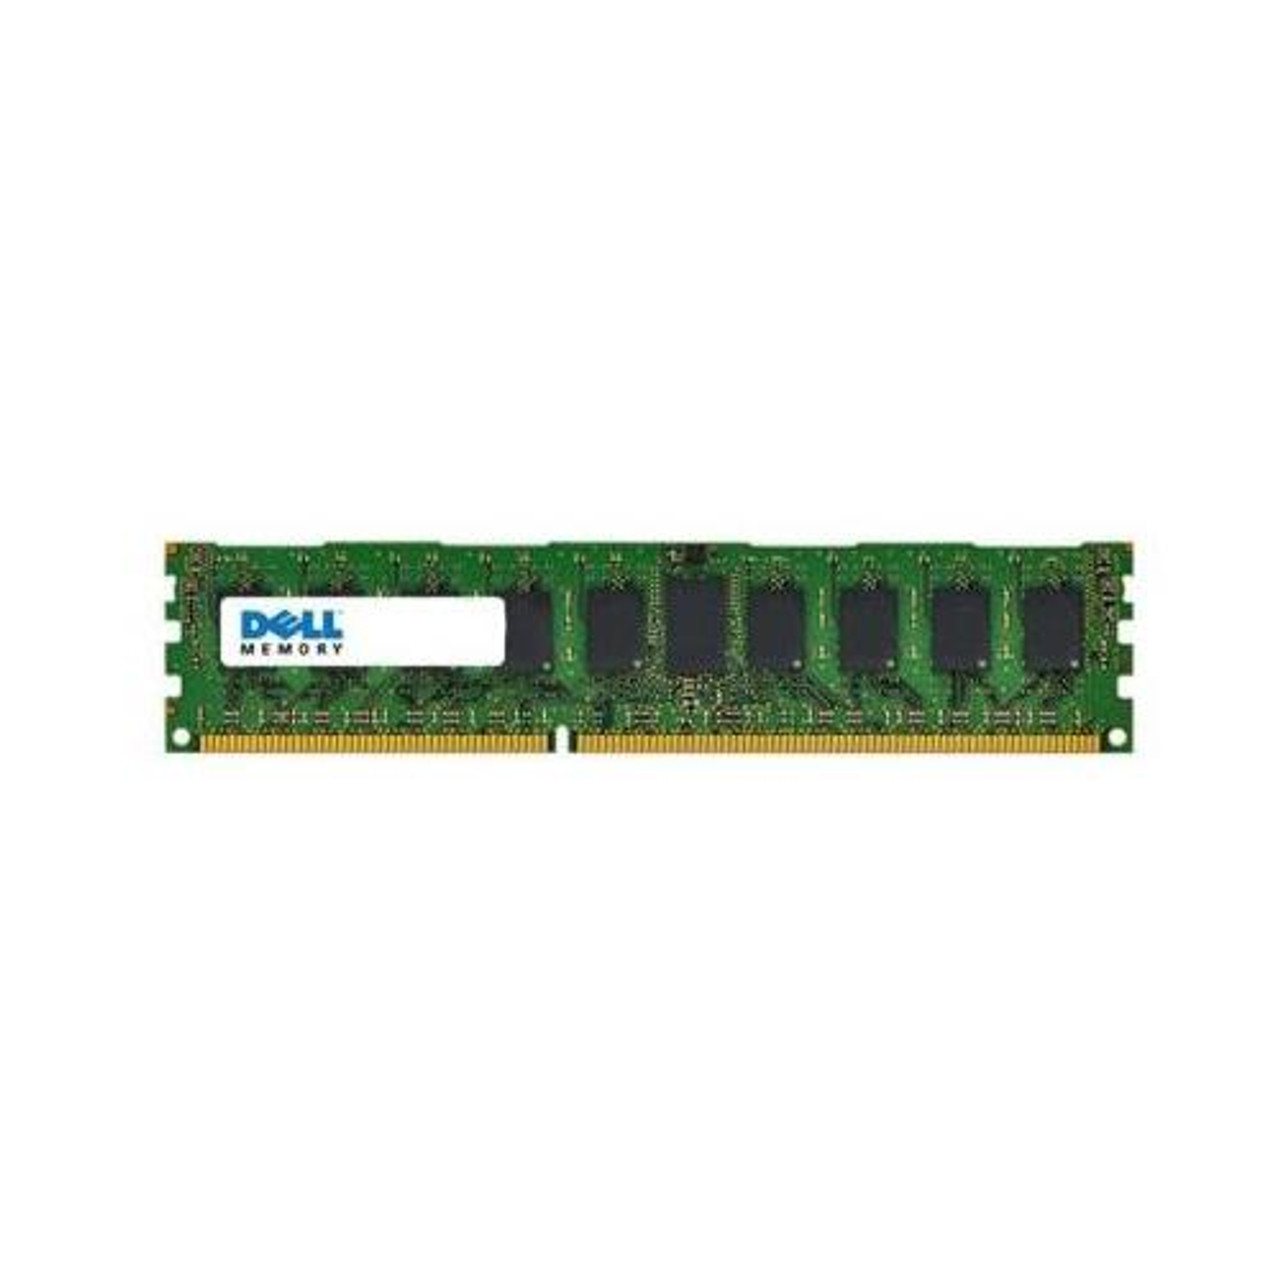 0093VH Dell 2GB DDR3 Registered ECC PC3-10600 1333Mhz 1Rx8 Server